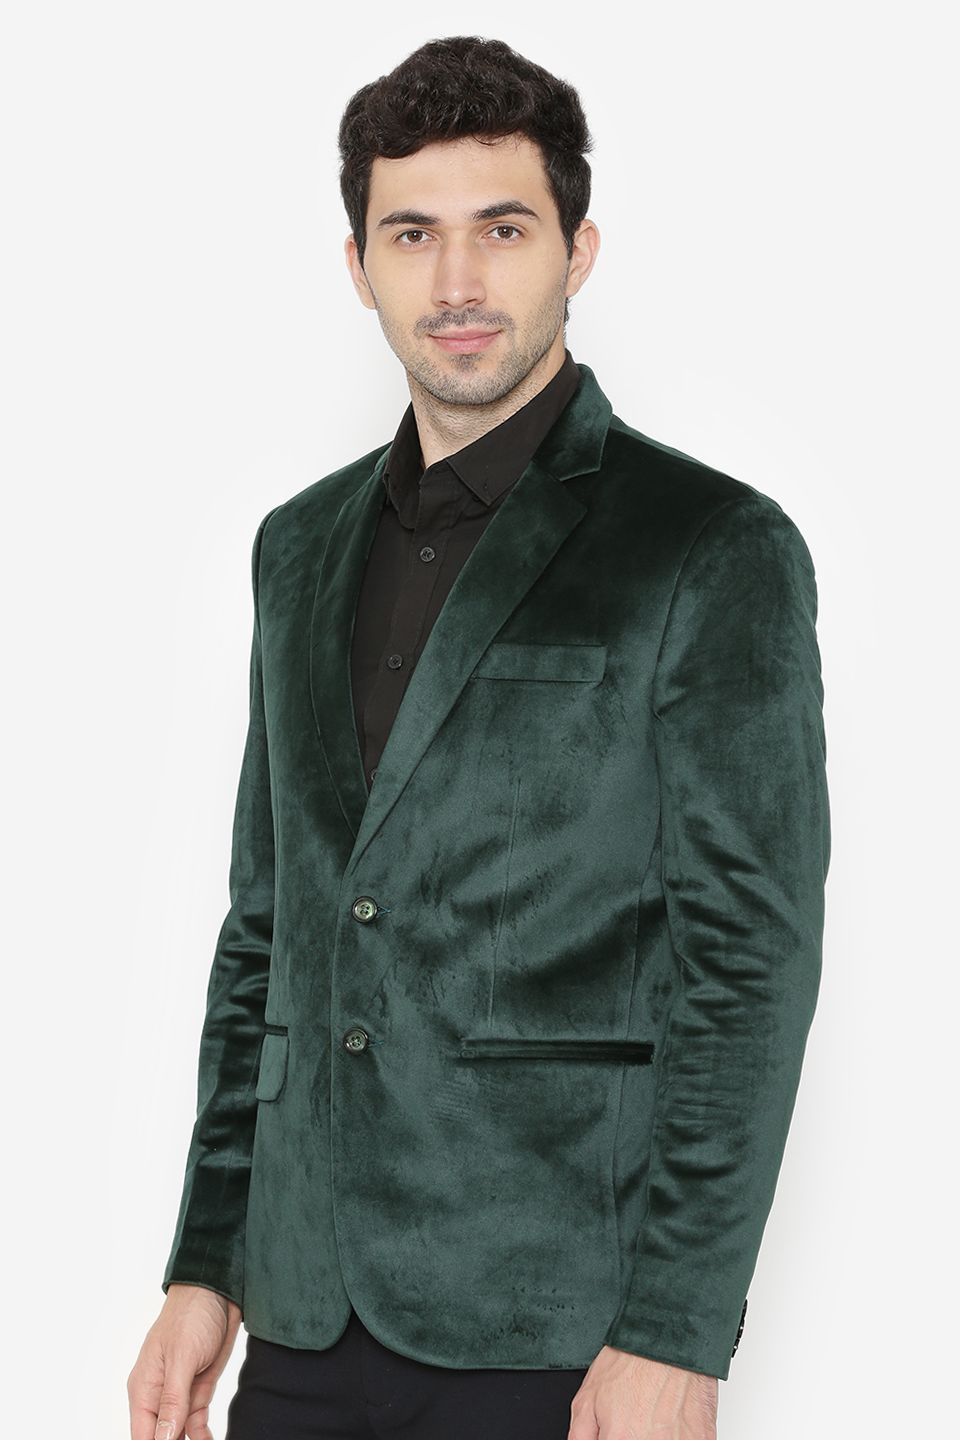 Wintage Men's Cotton Velvet Solid Party Blazer : Green